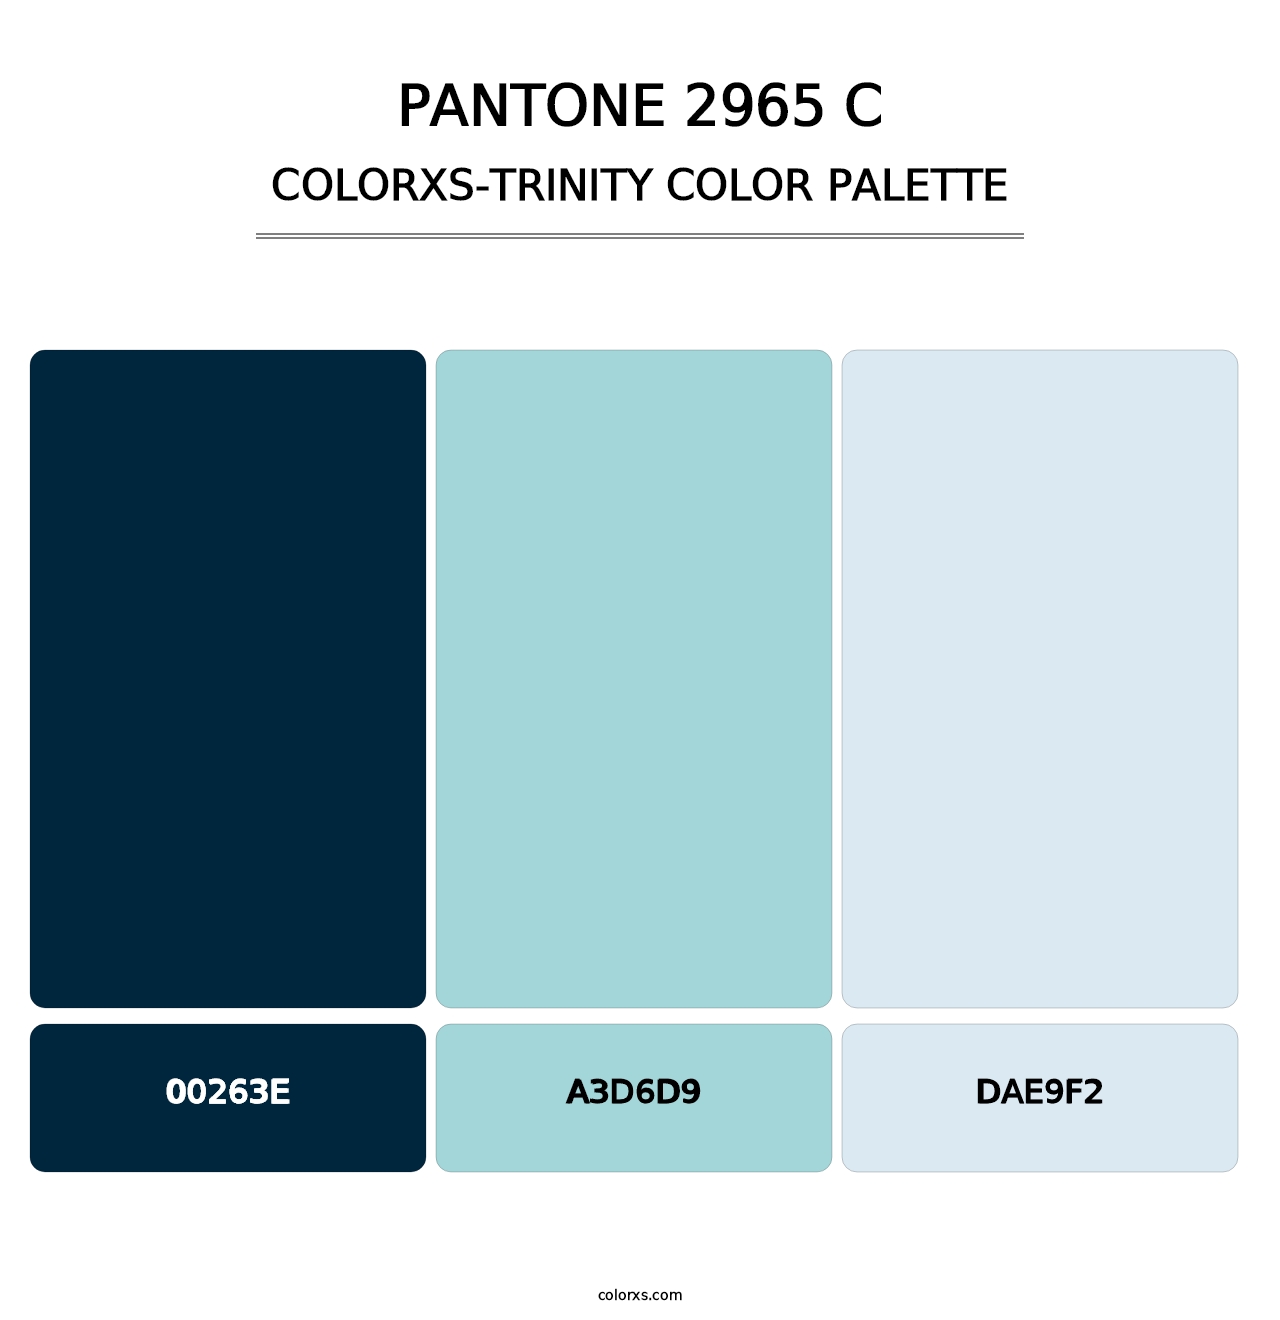 PANTONE 2965 C - Colorxs Trinity Palette